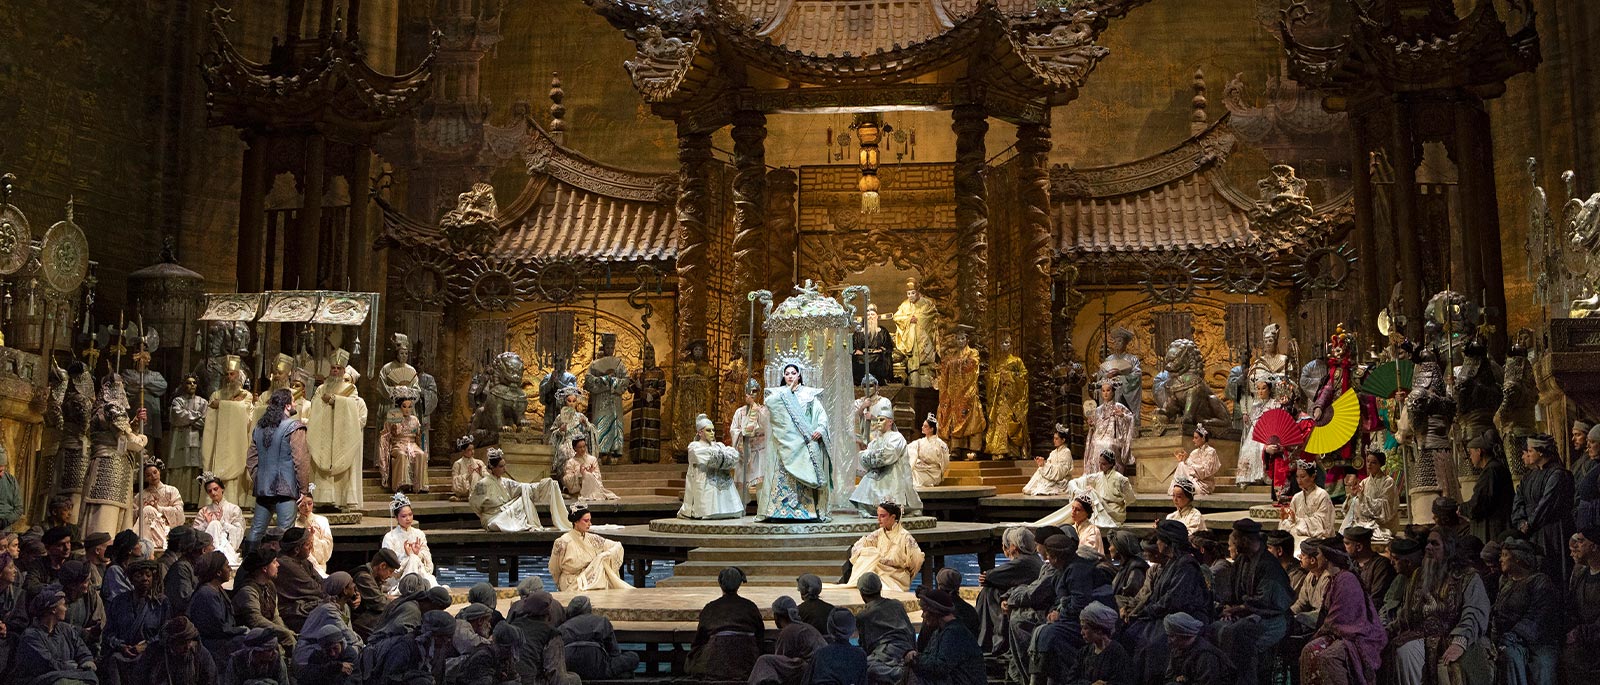 Alumni-Club Nordamerika: Virtual Opera Introduction: Puccini’s “Turandot”